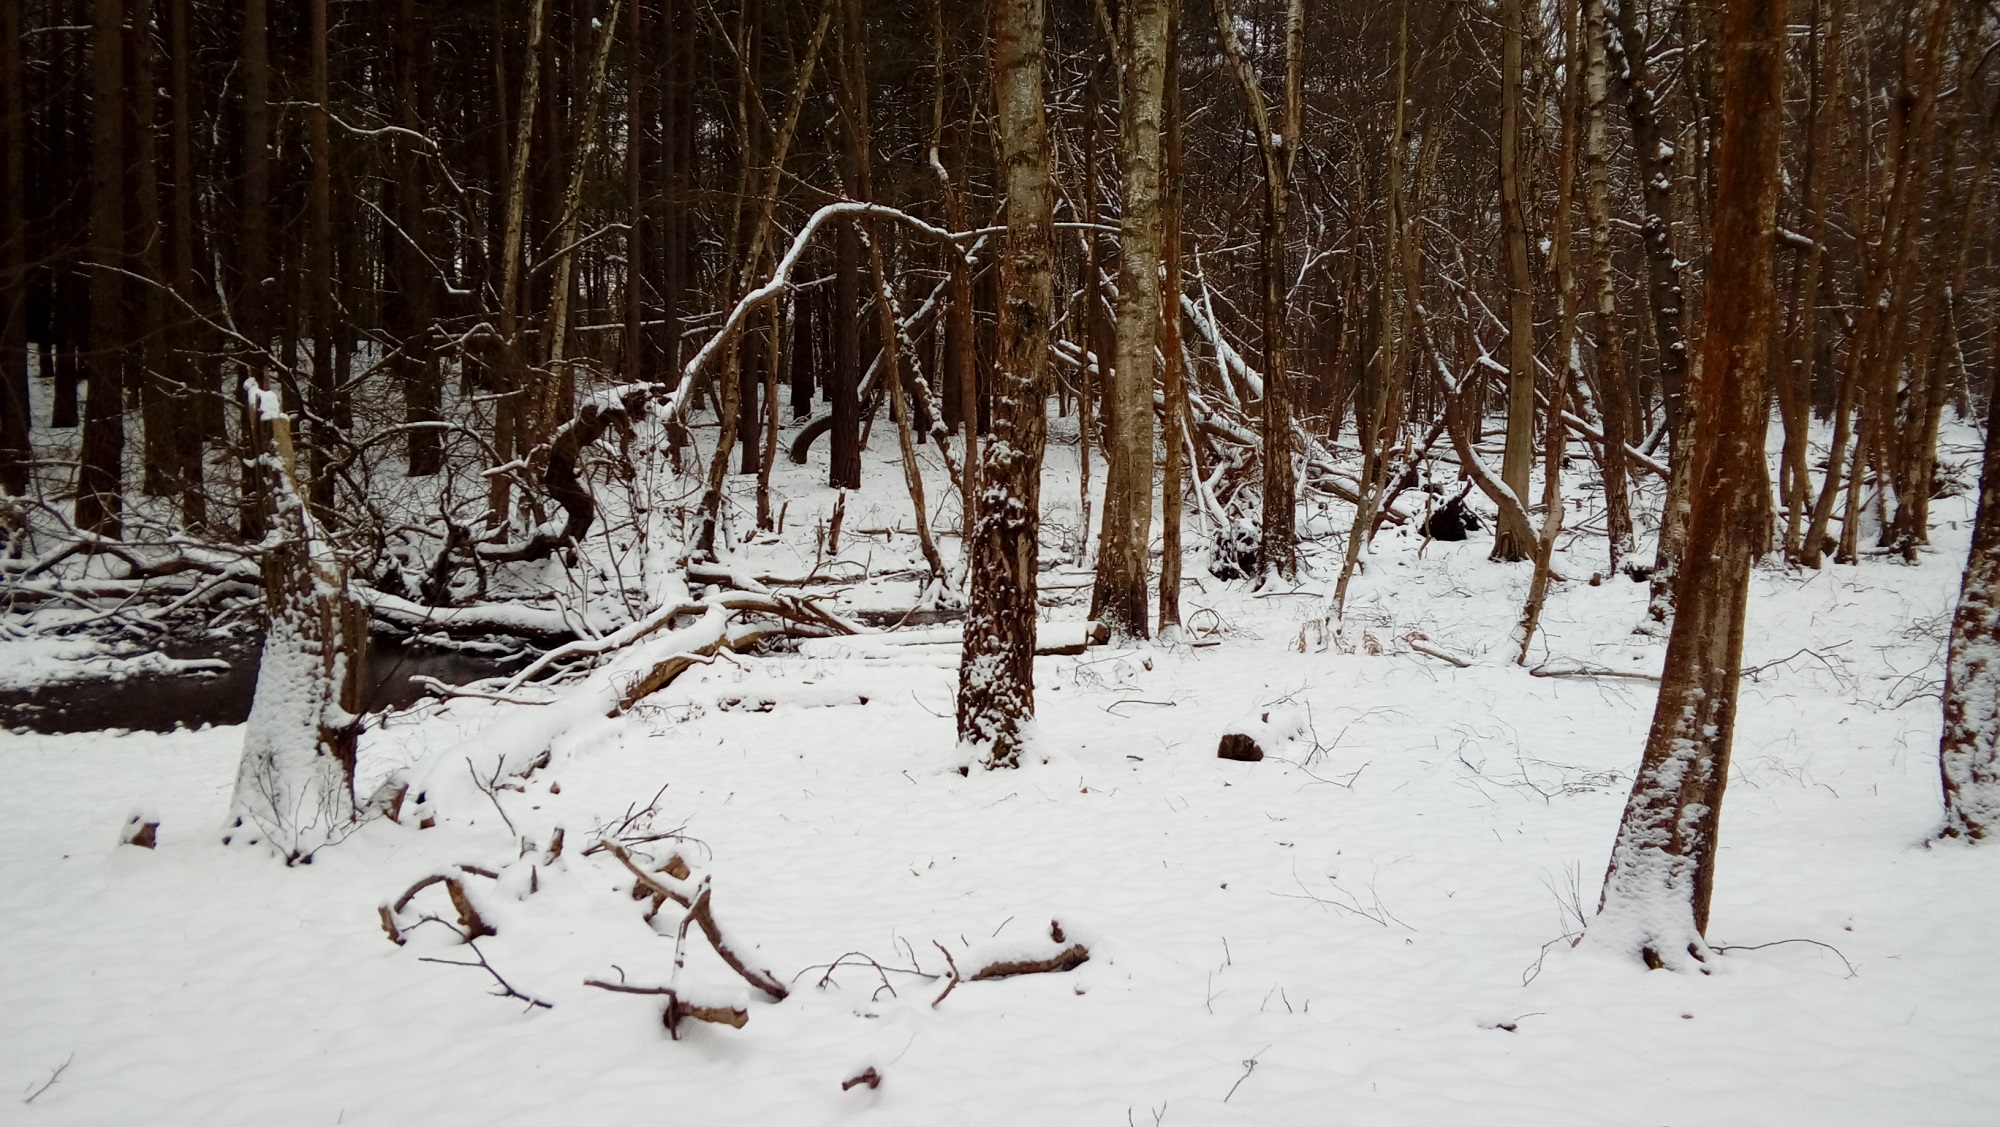 Woodland scene in winter snow